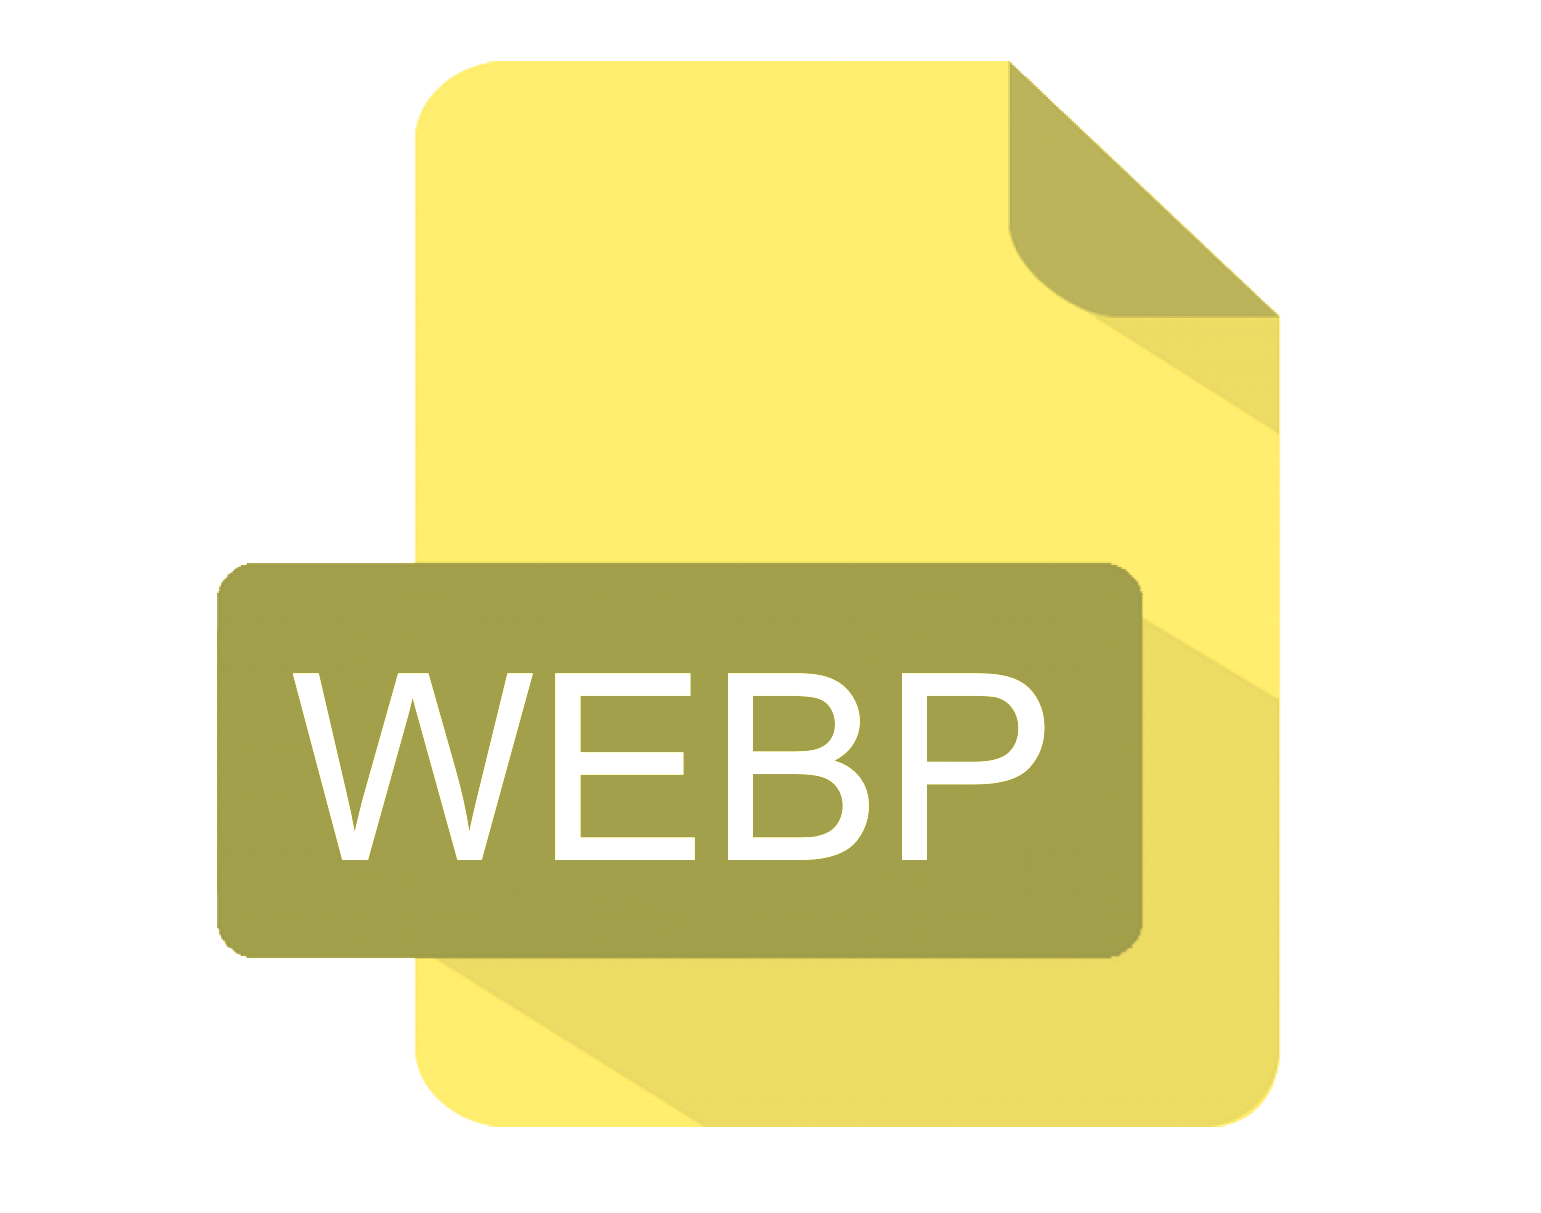 free png to webp converter